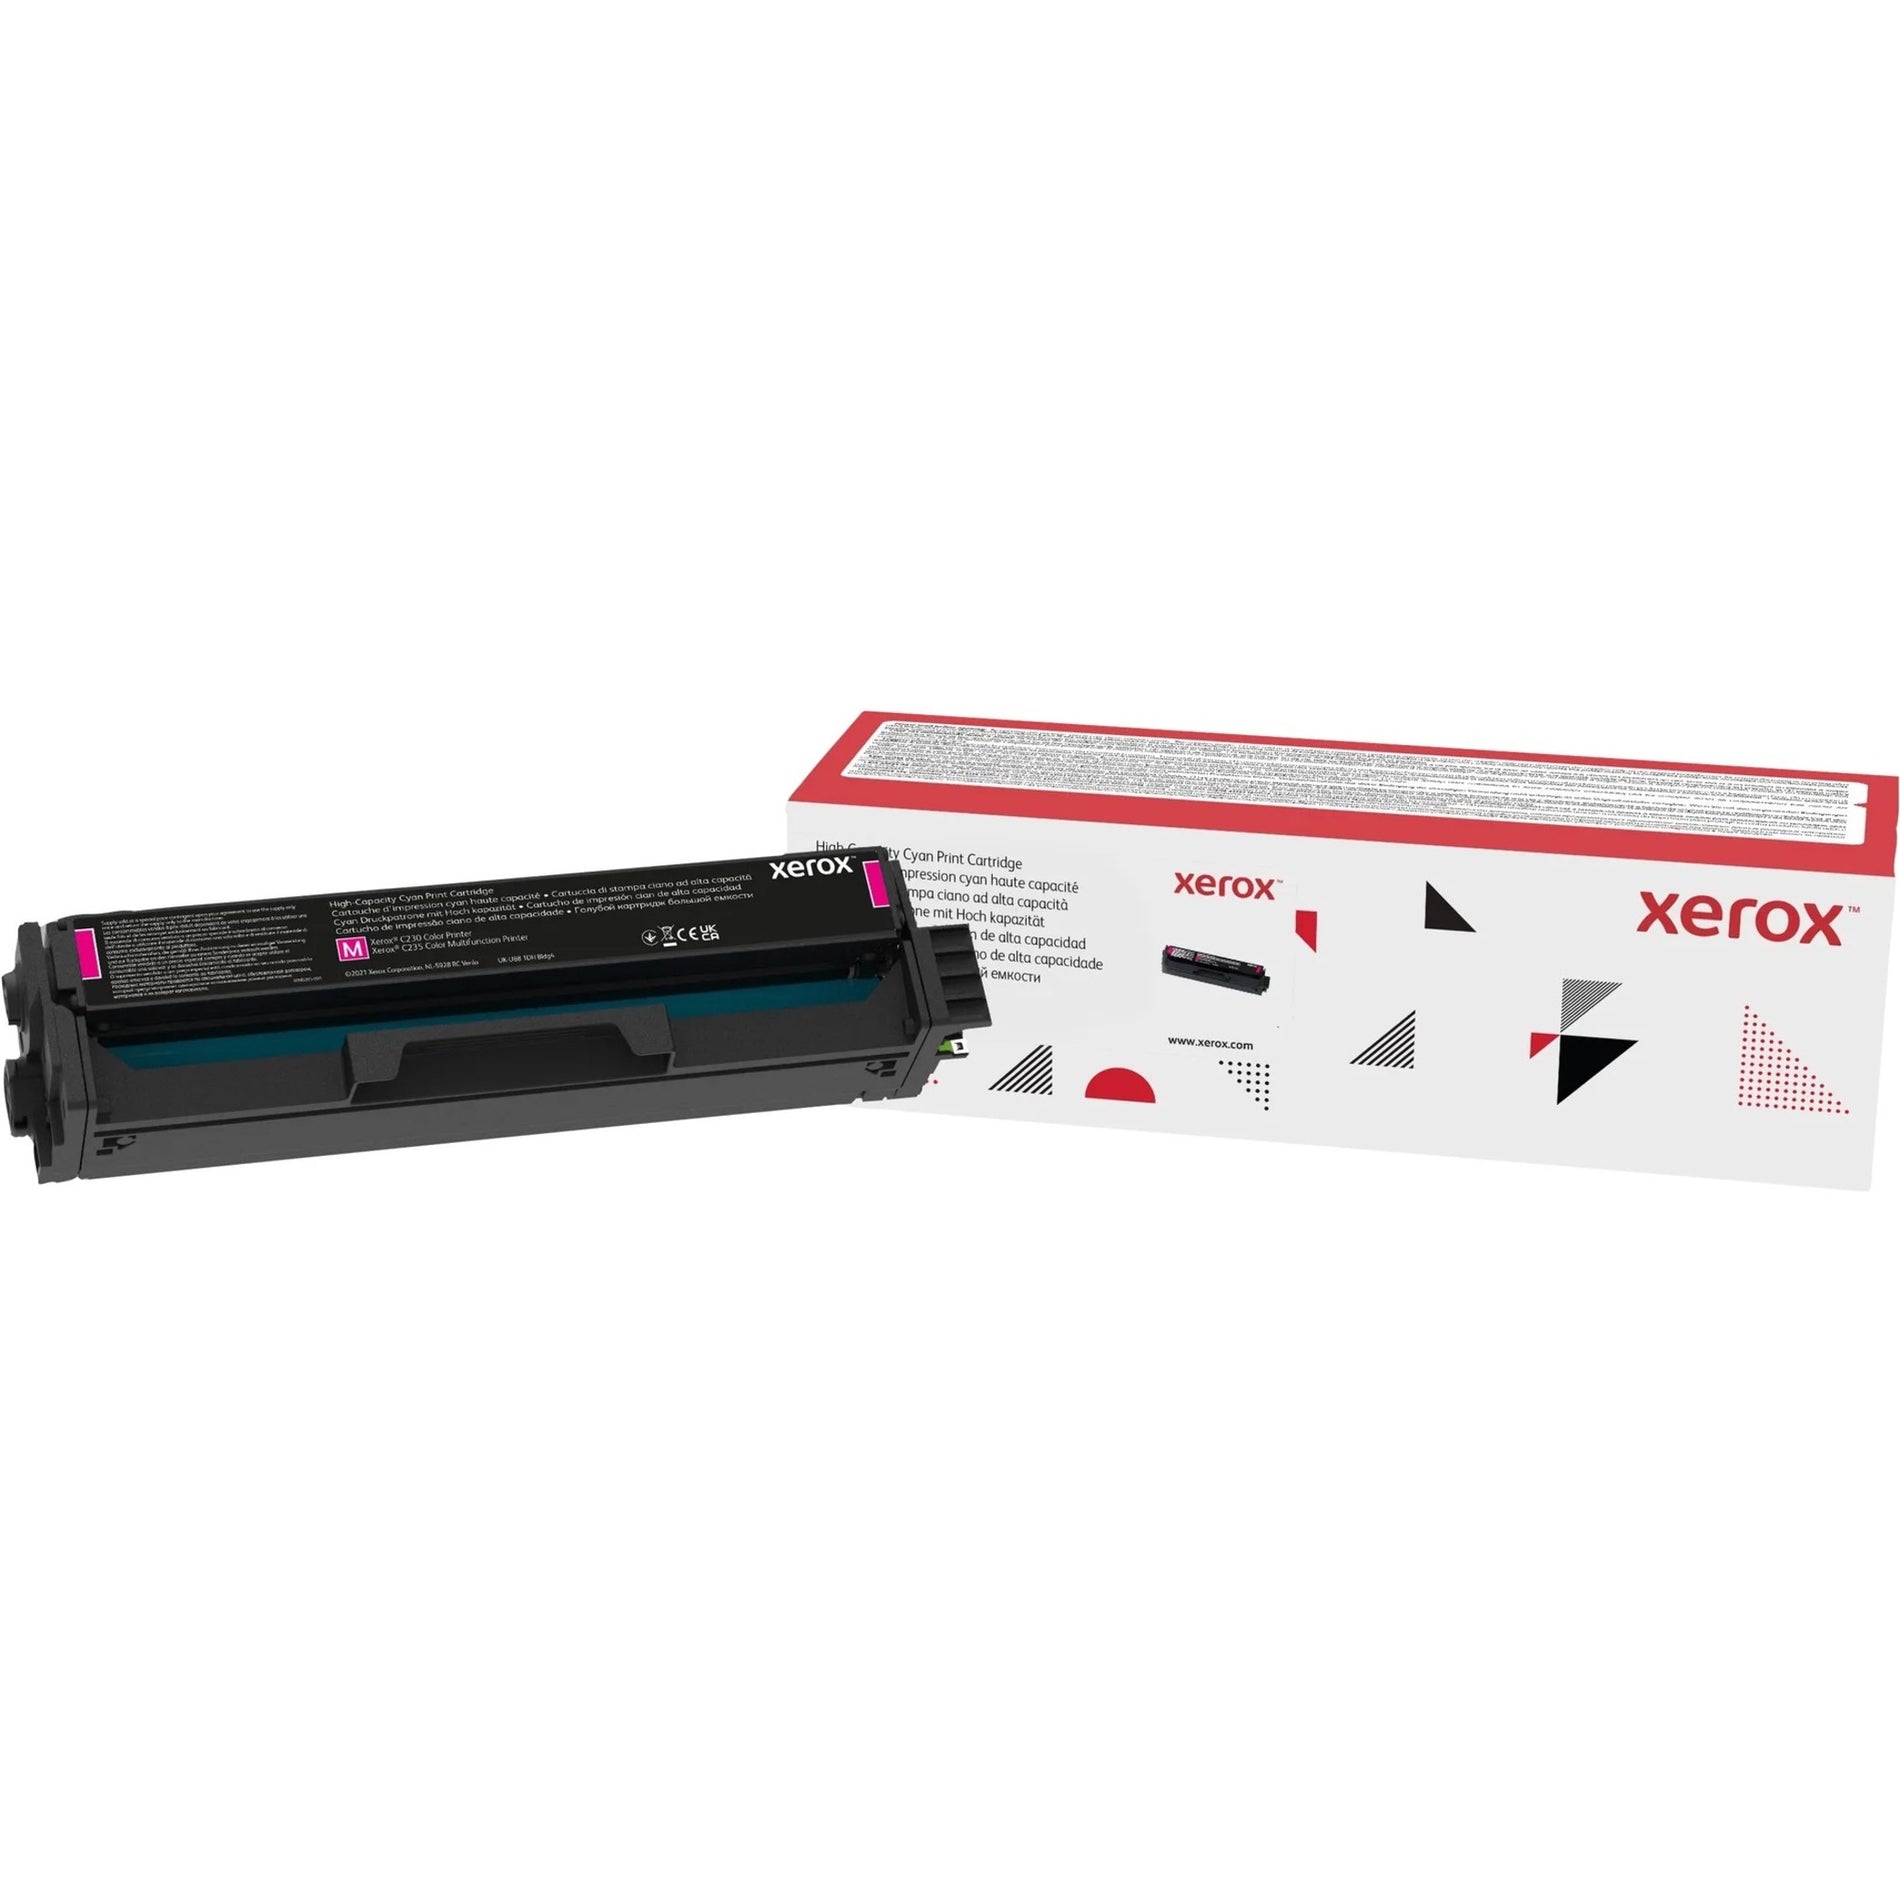 Xerox 006R04393 C230 / C235 Magenta High Capacity Toner Cartridge (2,500 pages), Original